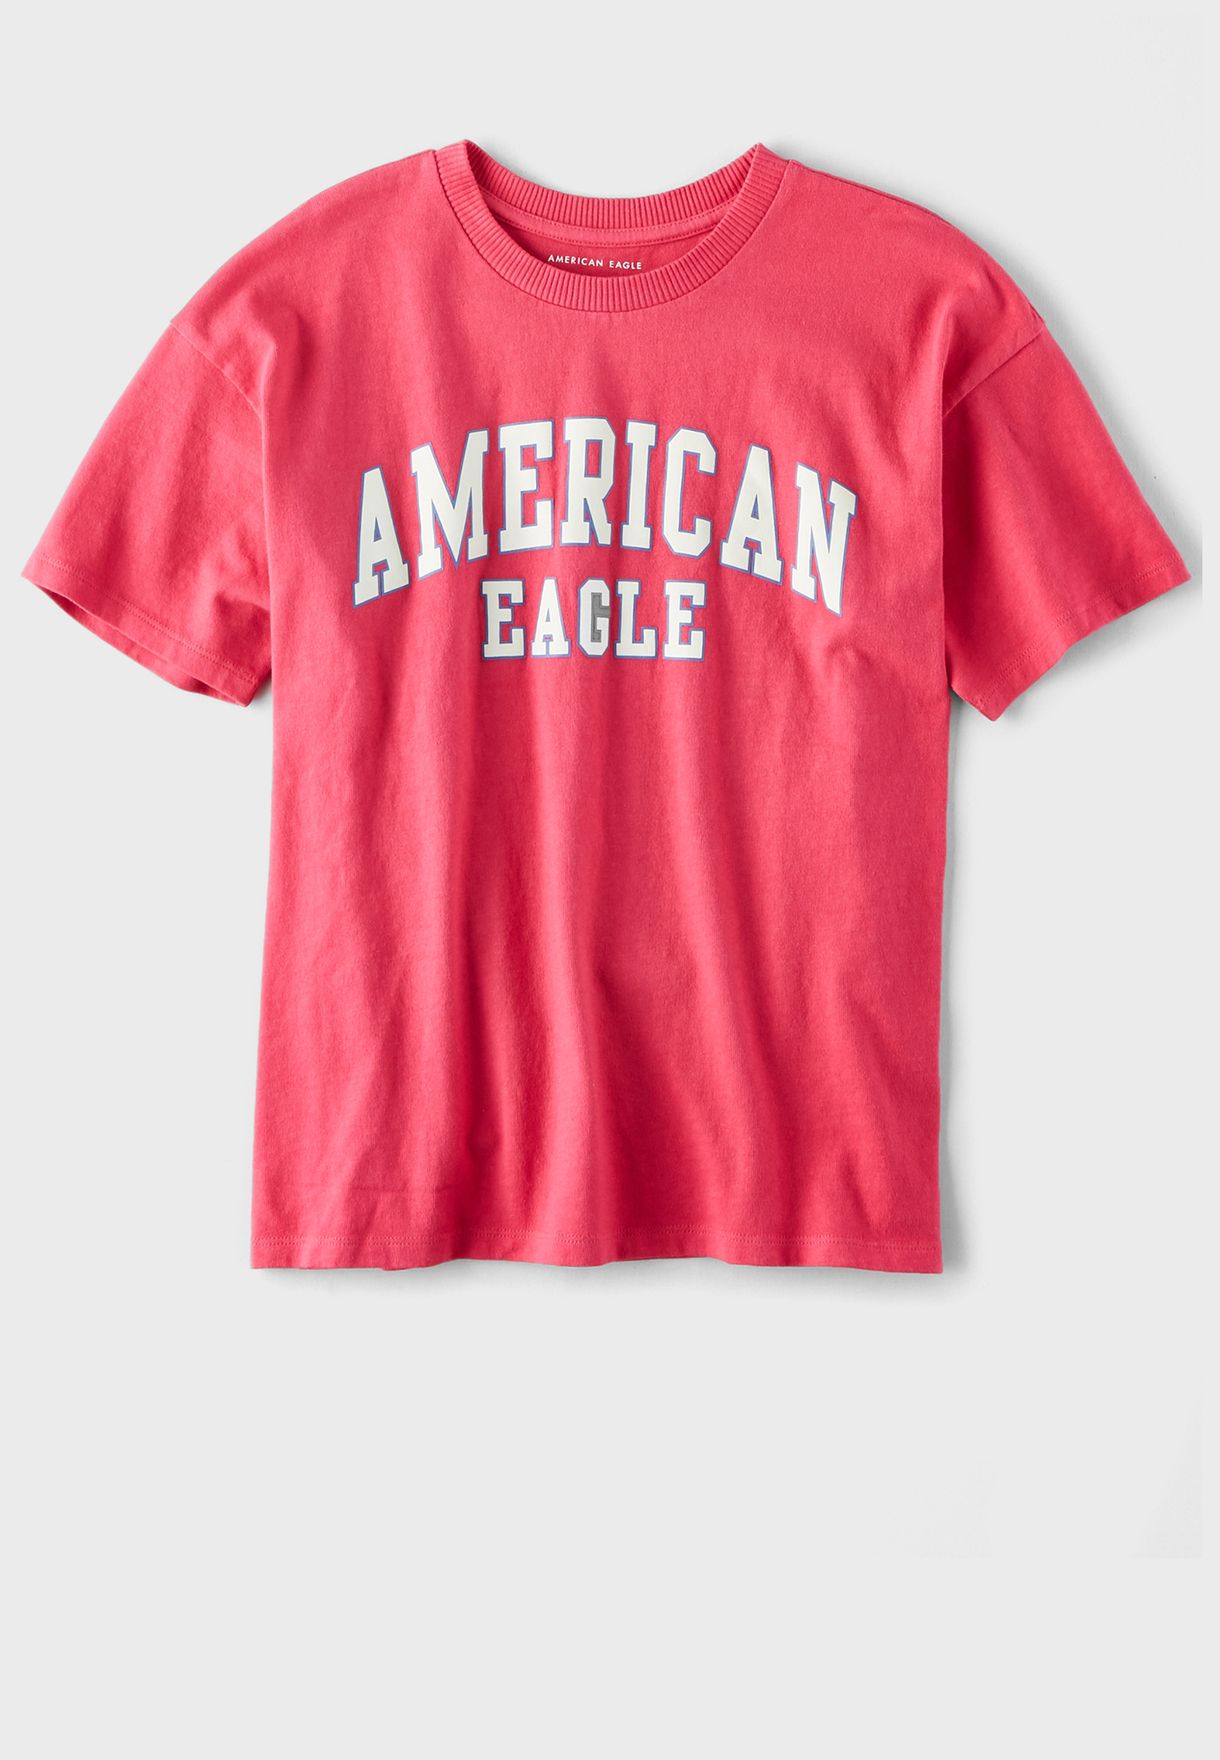 American Eagle shirts women